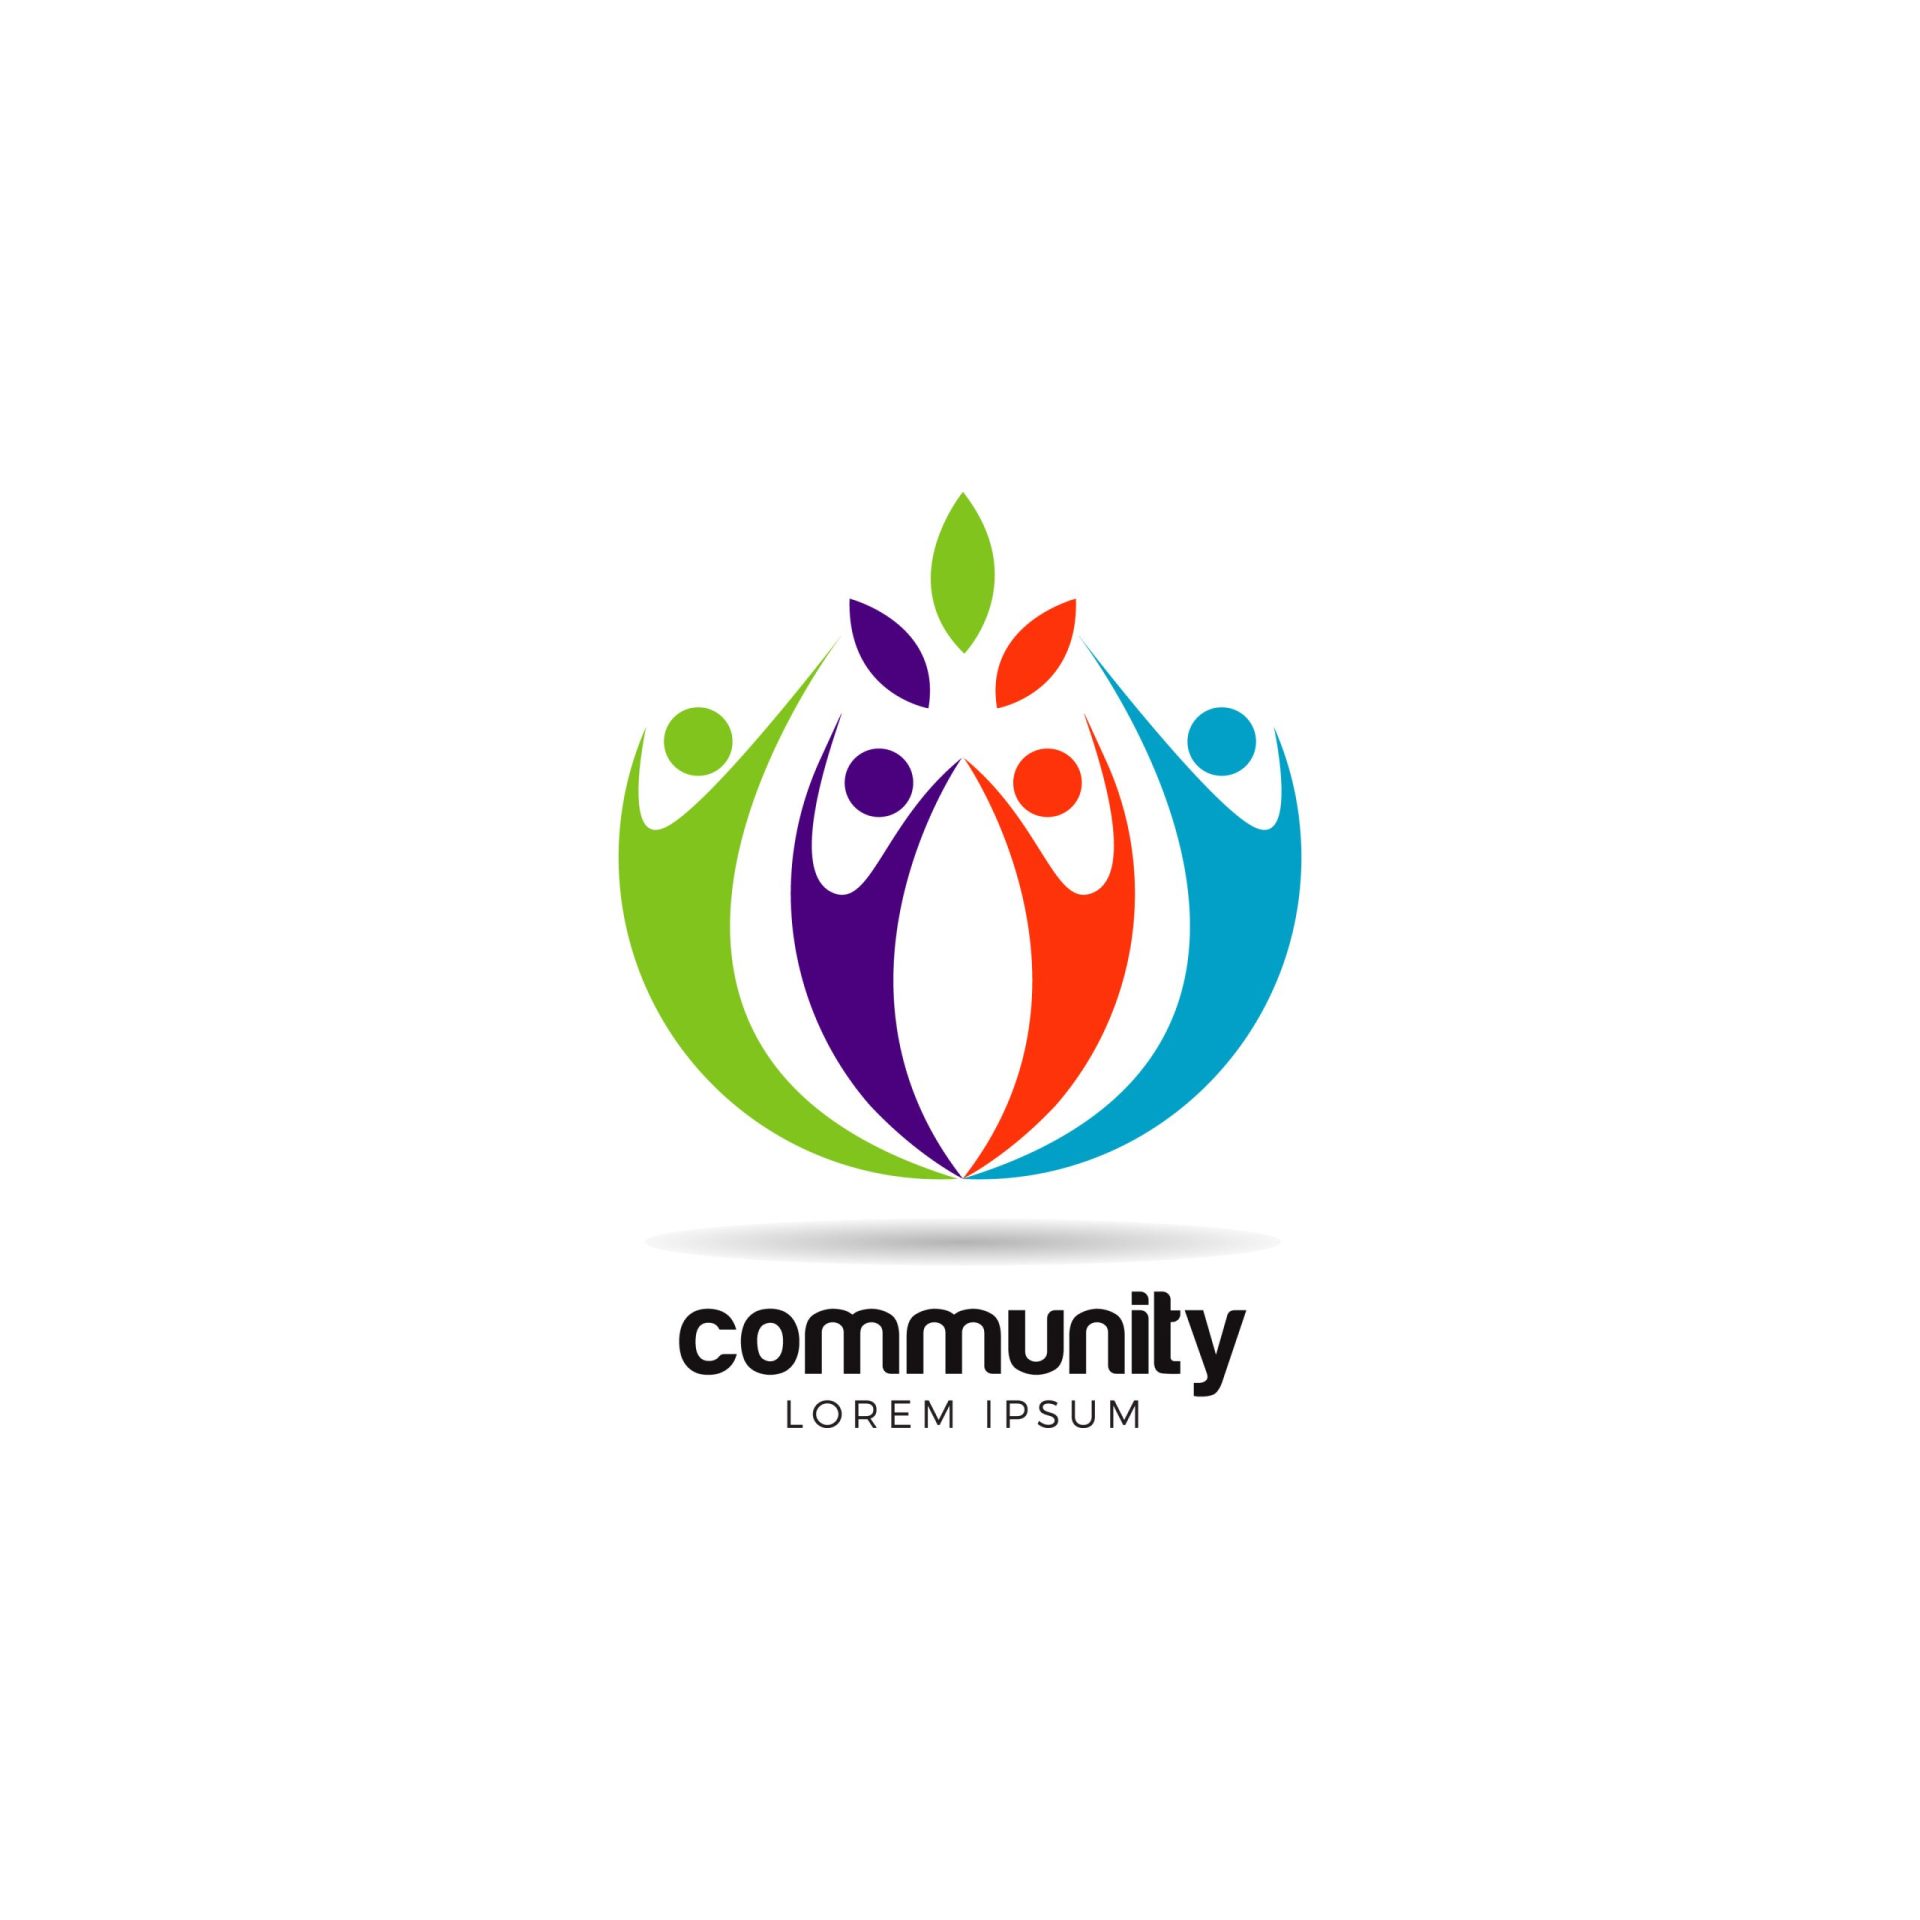 community logo ideas 4